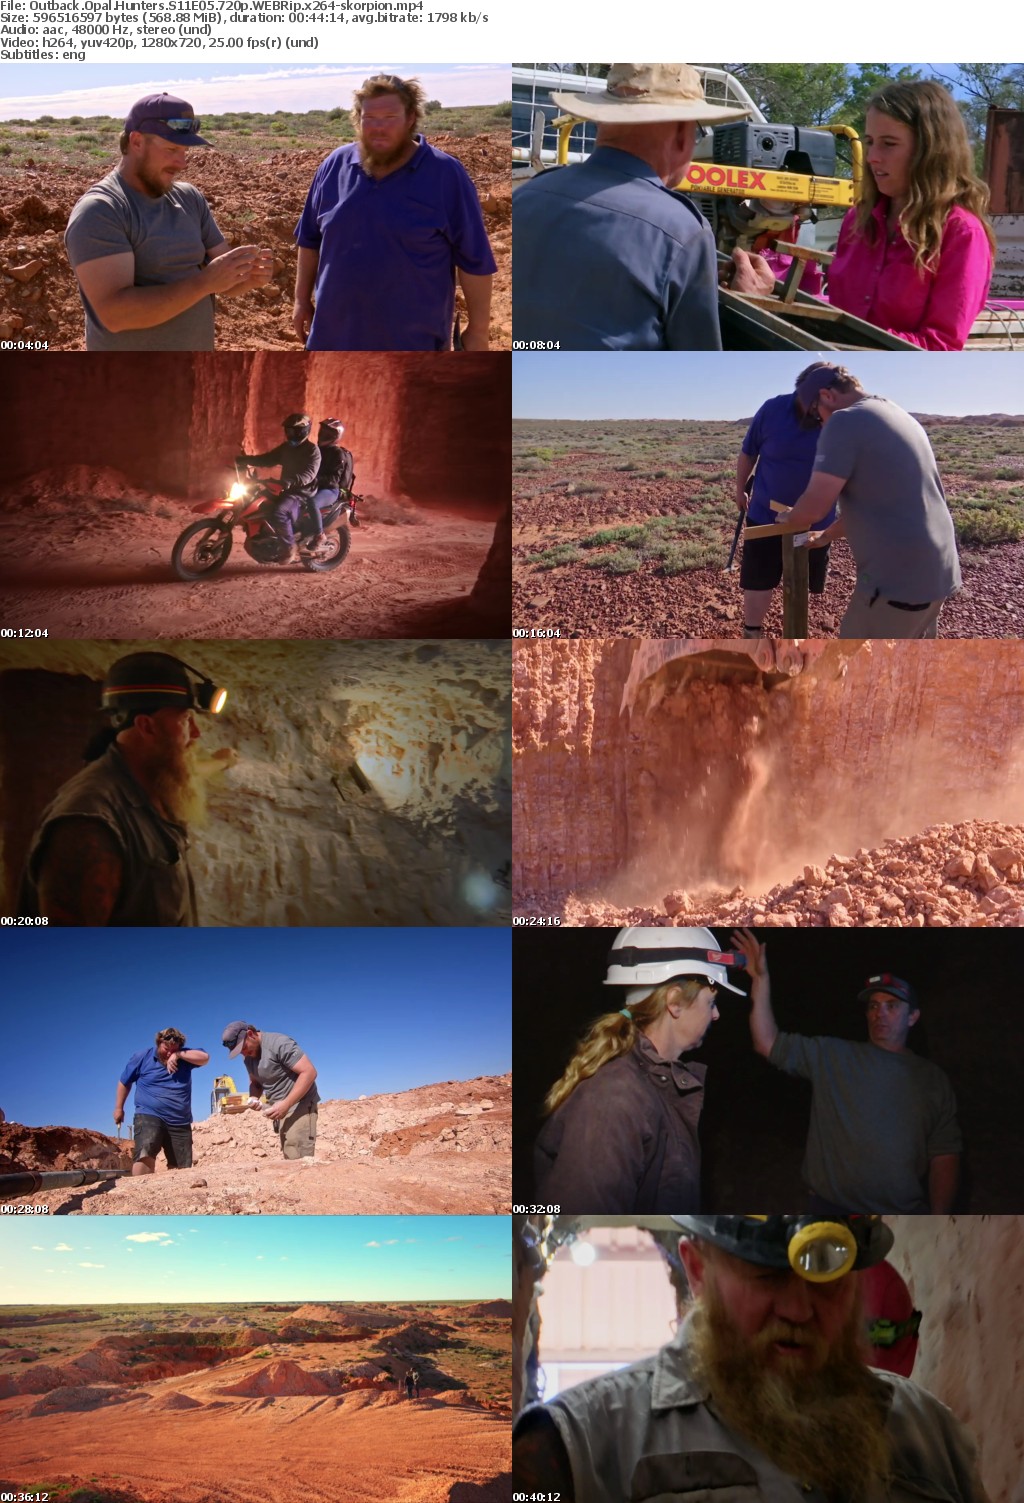 Outback Opal Hunters S11E05 720p WEBRip x264-skorpion mp4